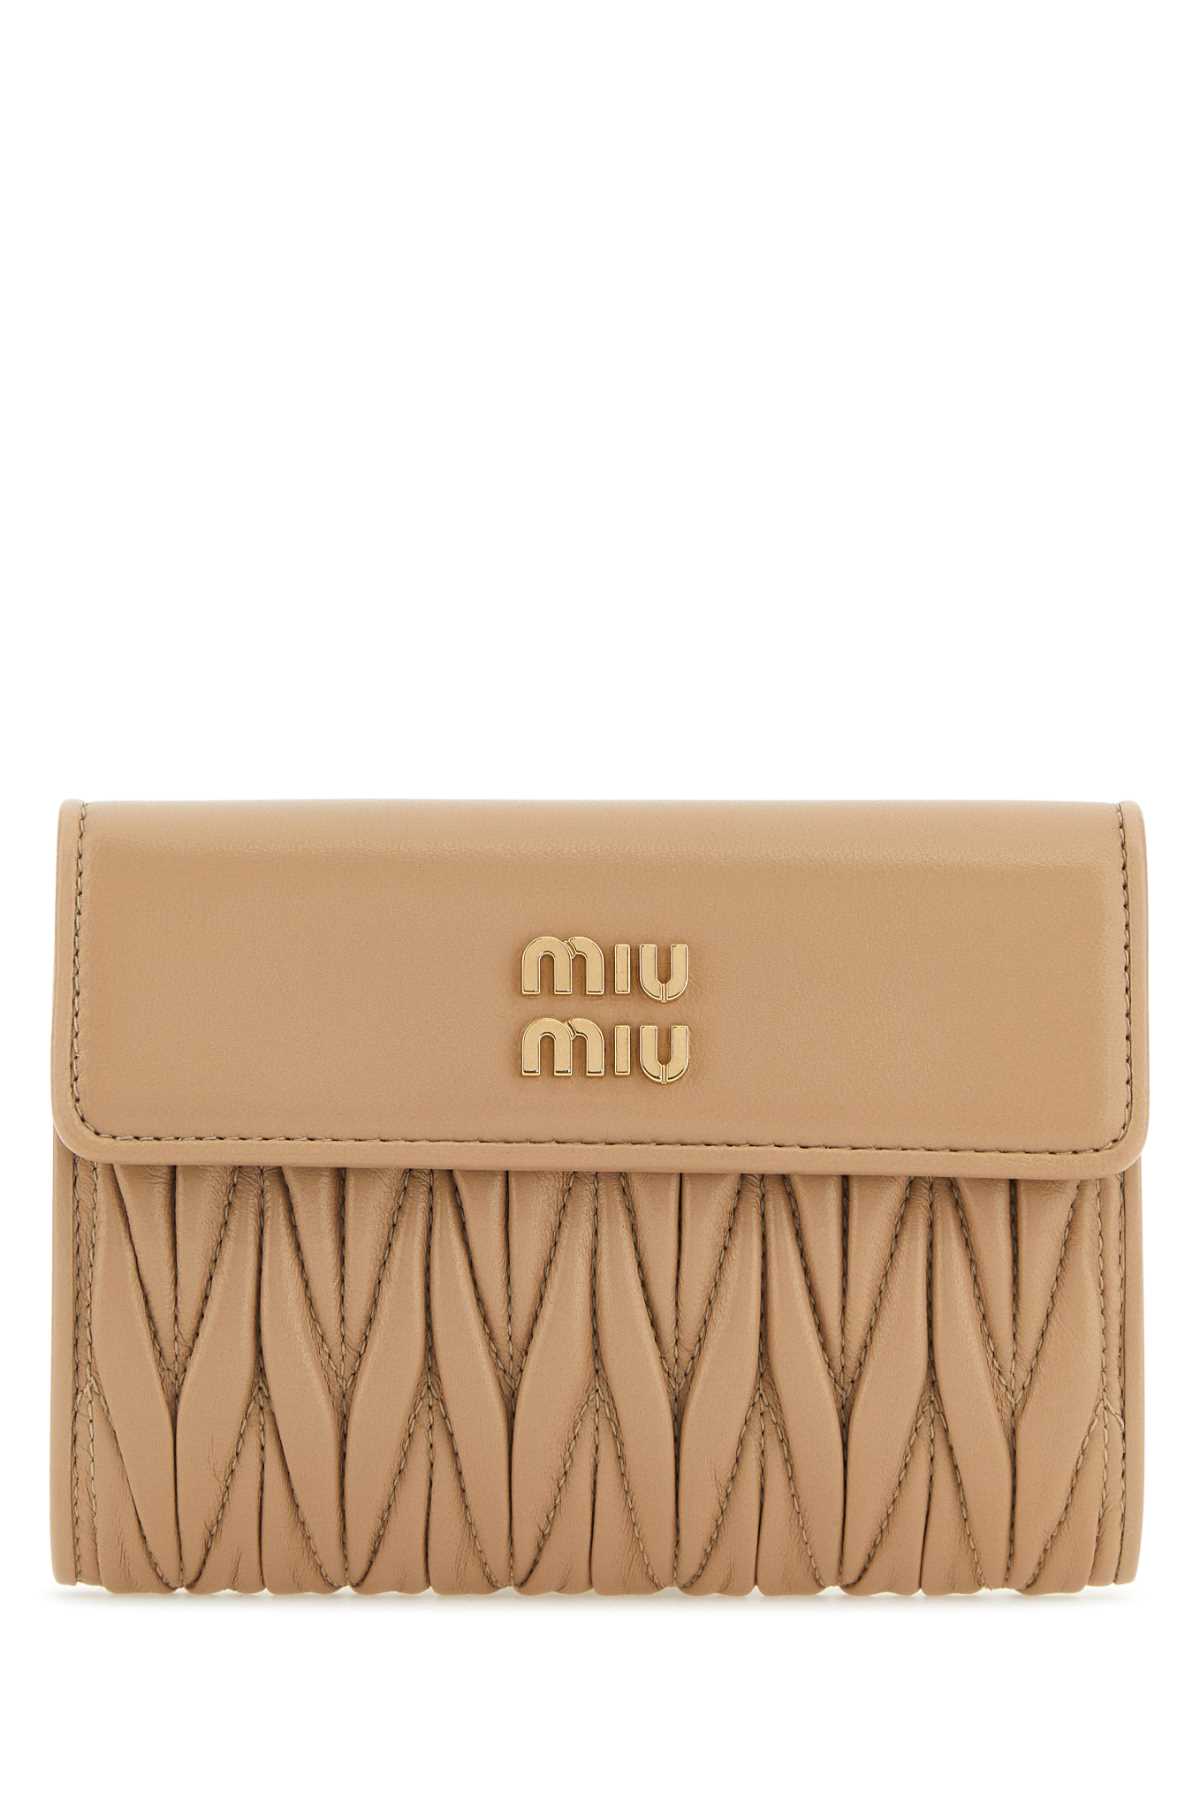 Miu Miu Sand Nappa Leather Wallet In Sabbia